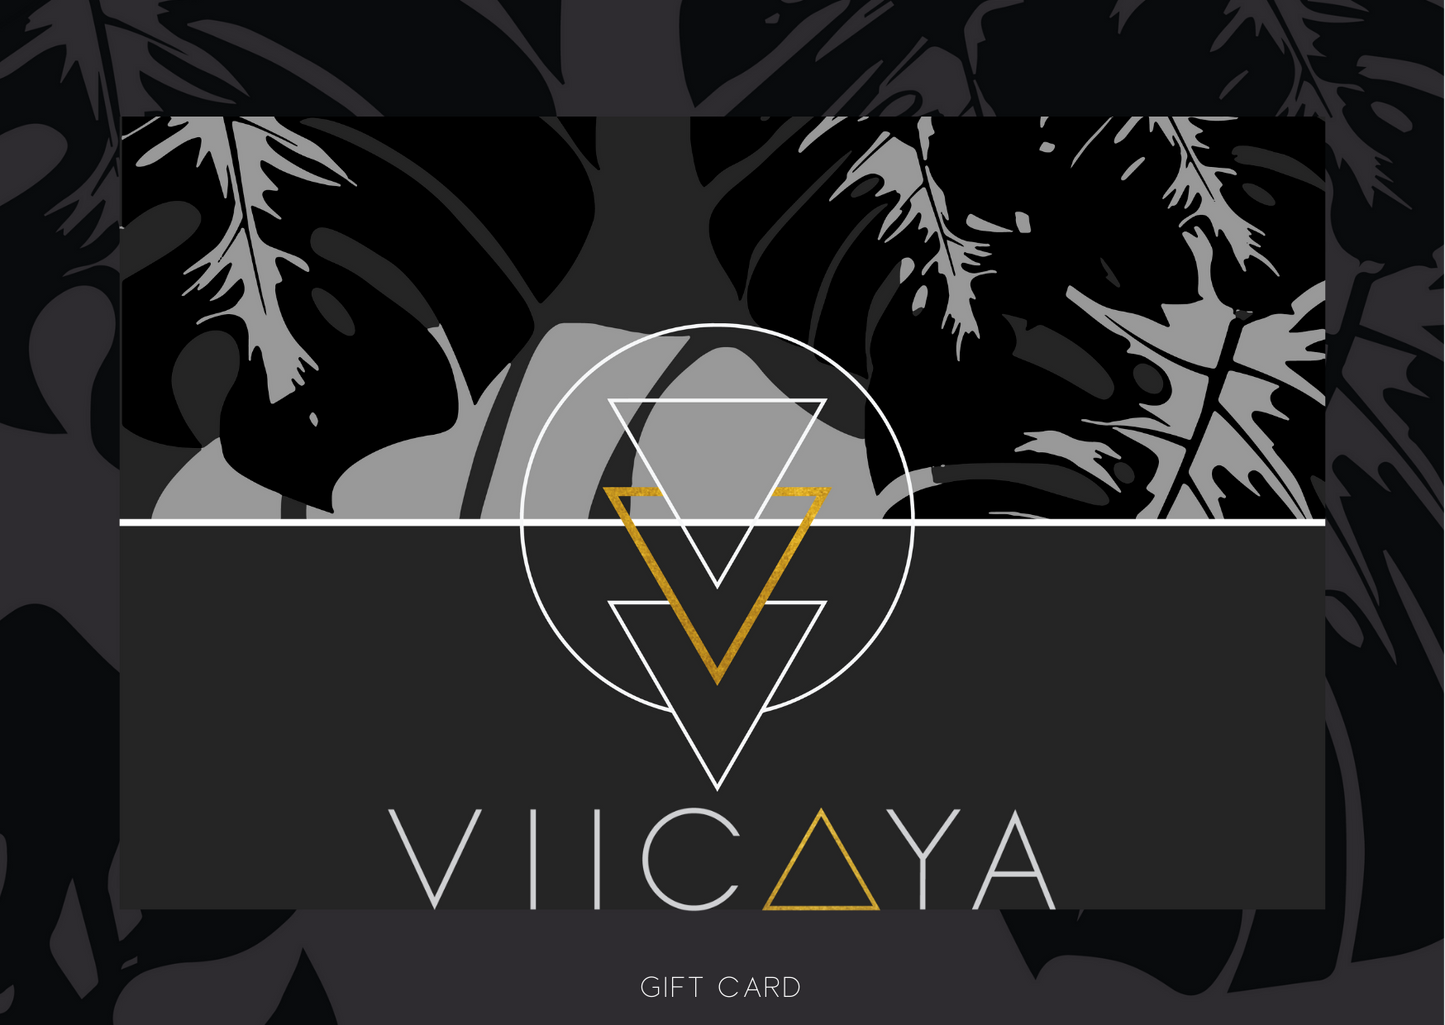 VIICAYA Gift Card